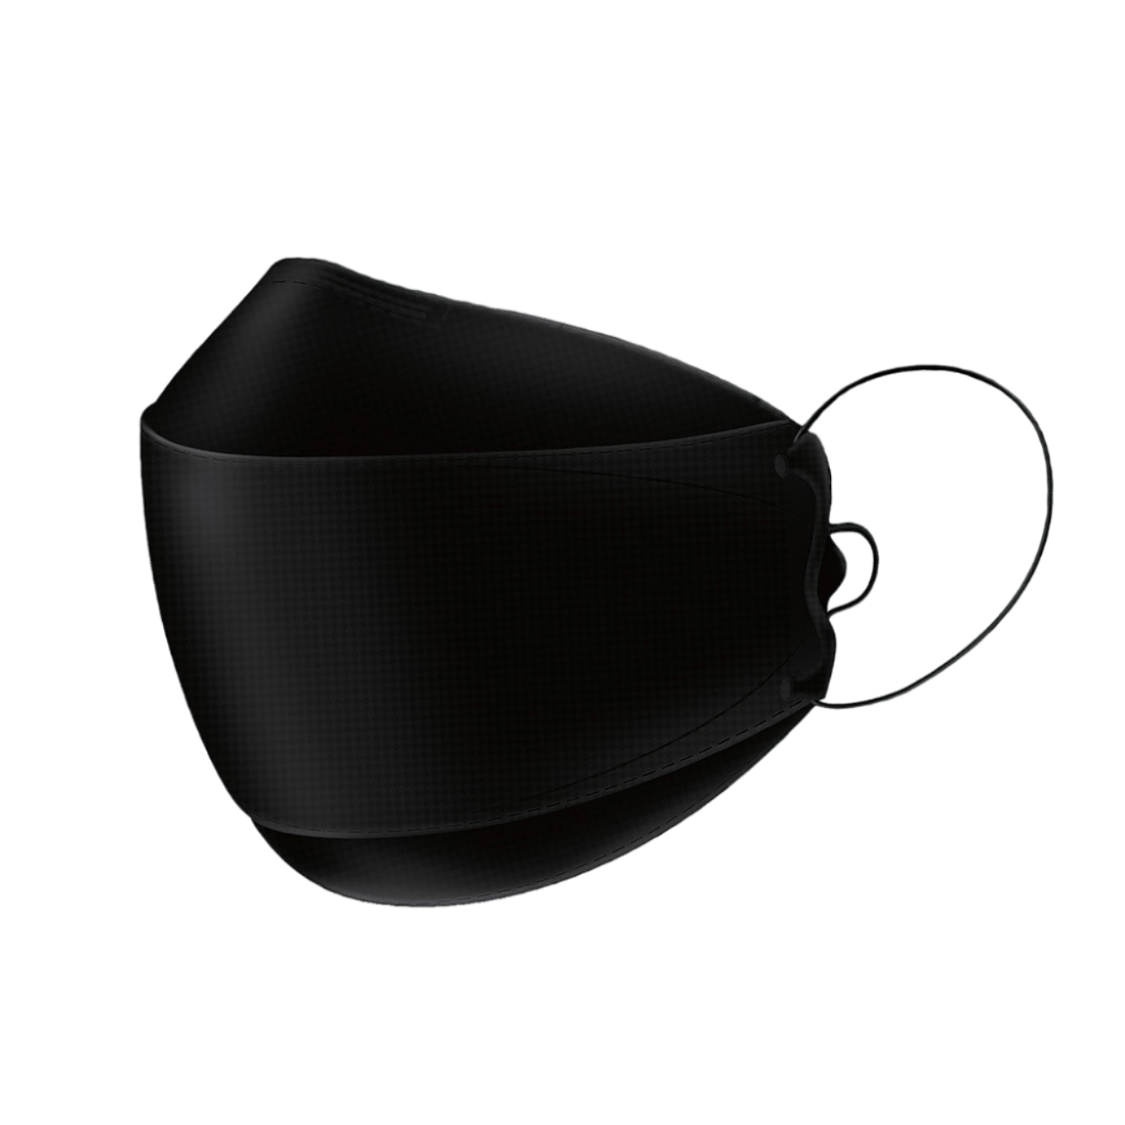 Onique Black 3D Trifold Boat Shape Adjustable Ear-Loop KF94 Mask Left 3Q View Mask Only